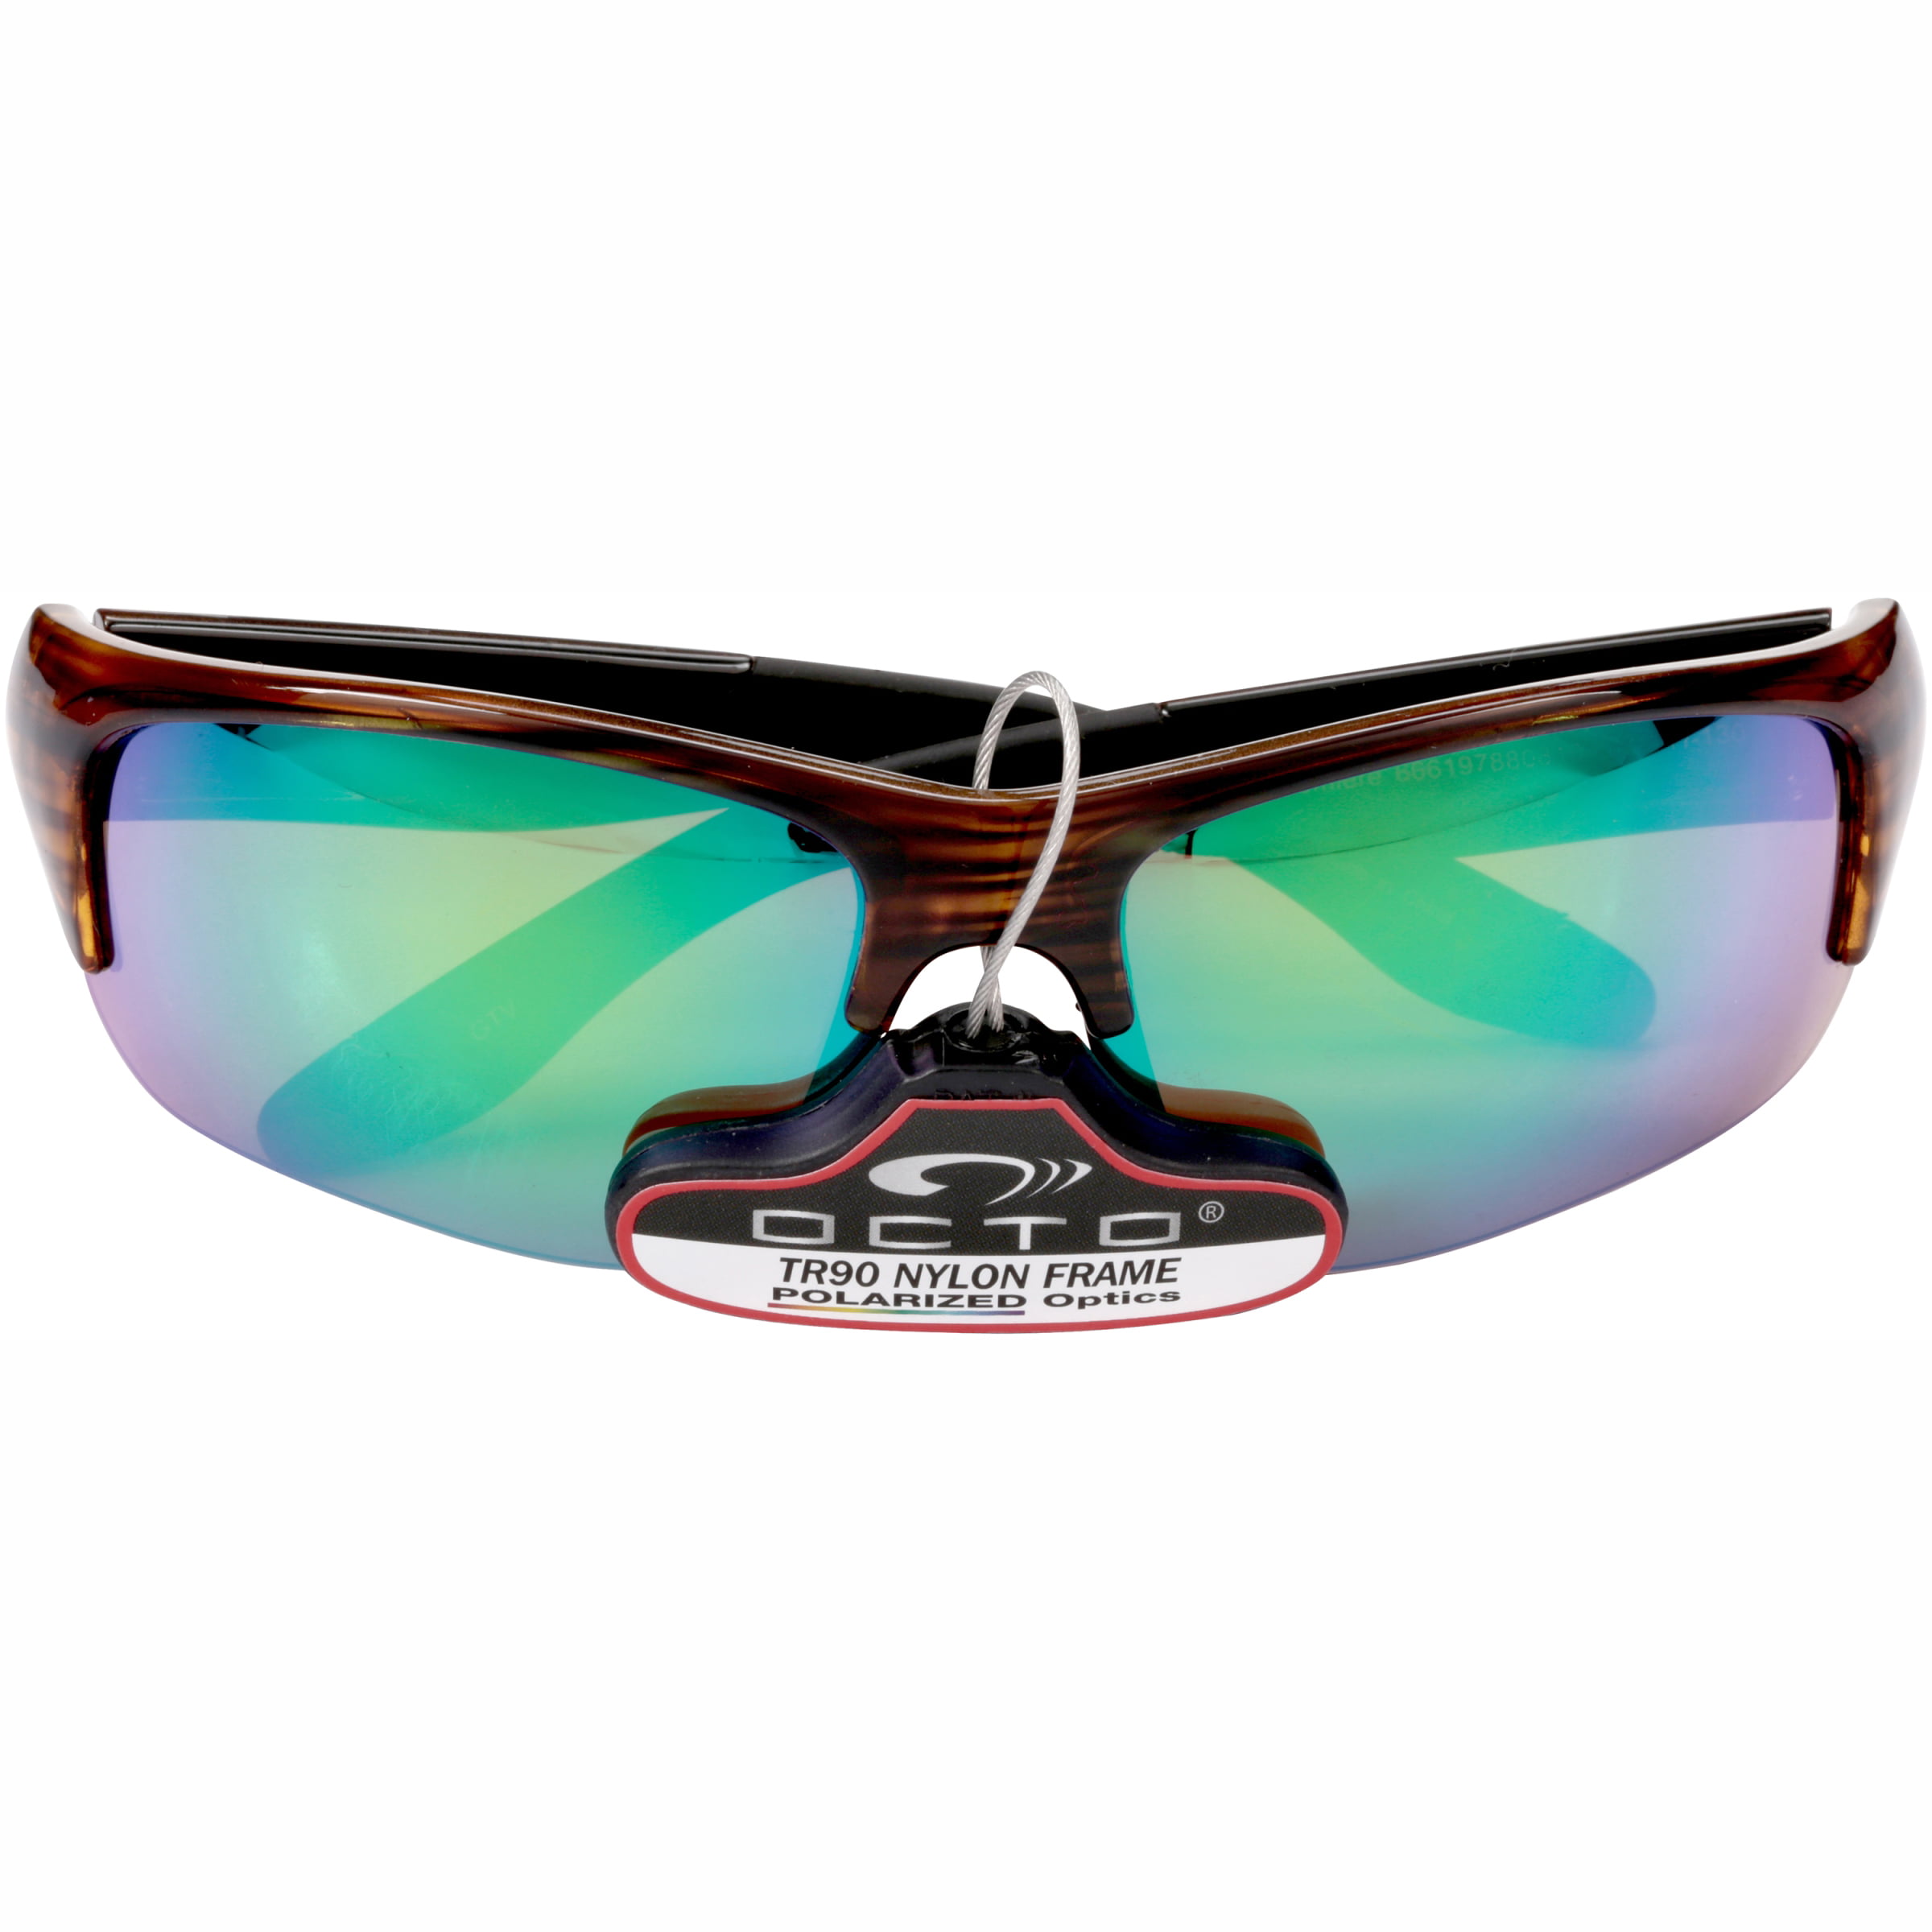 Oakley Vault, 29300 Hempstead Rd Cypress, TX  Men's and Women's  Sunglasses, Goggles, & Apparel